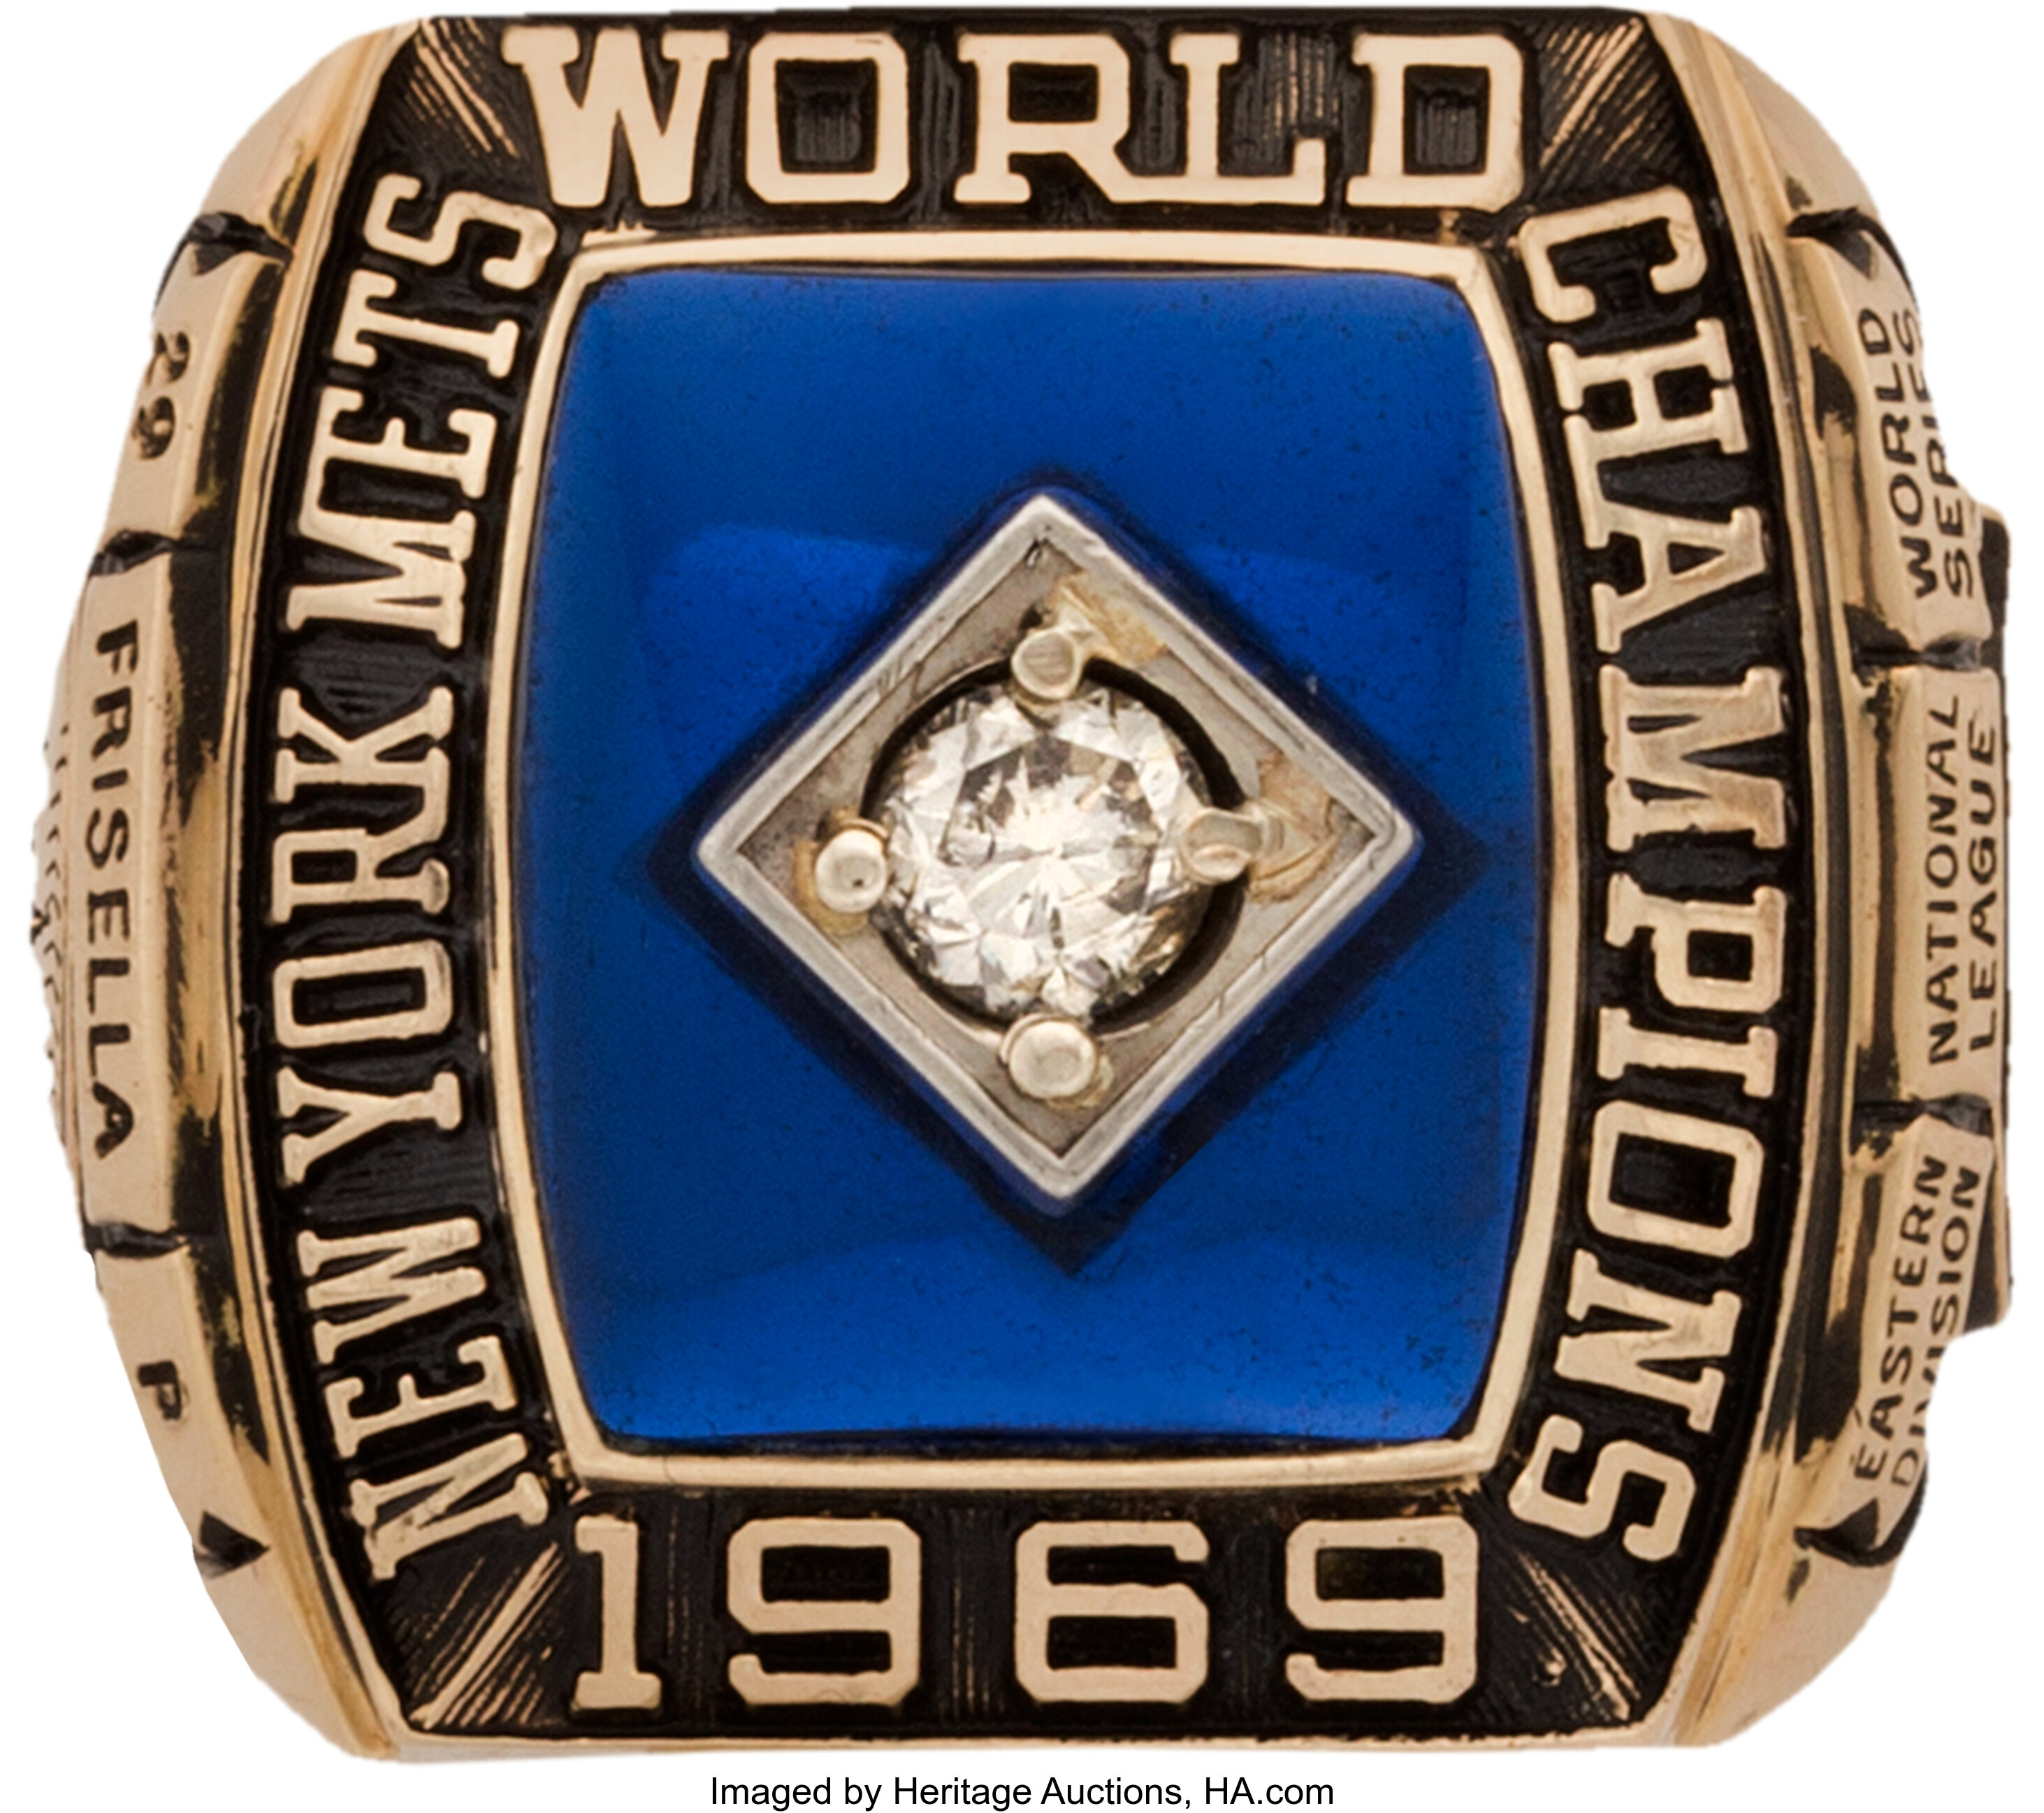 1969 World Series Commemorative Pin - Mets vs. Orioles